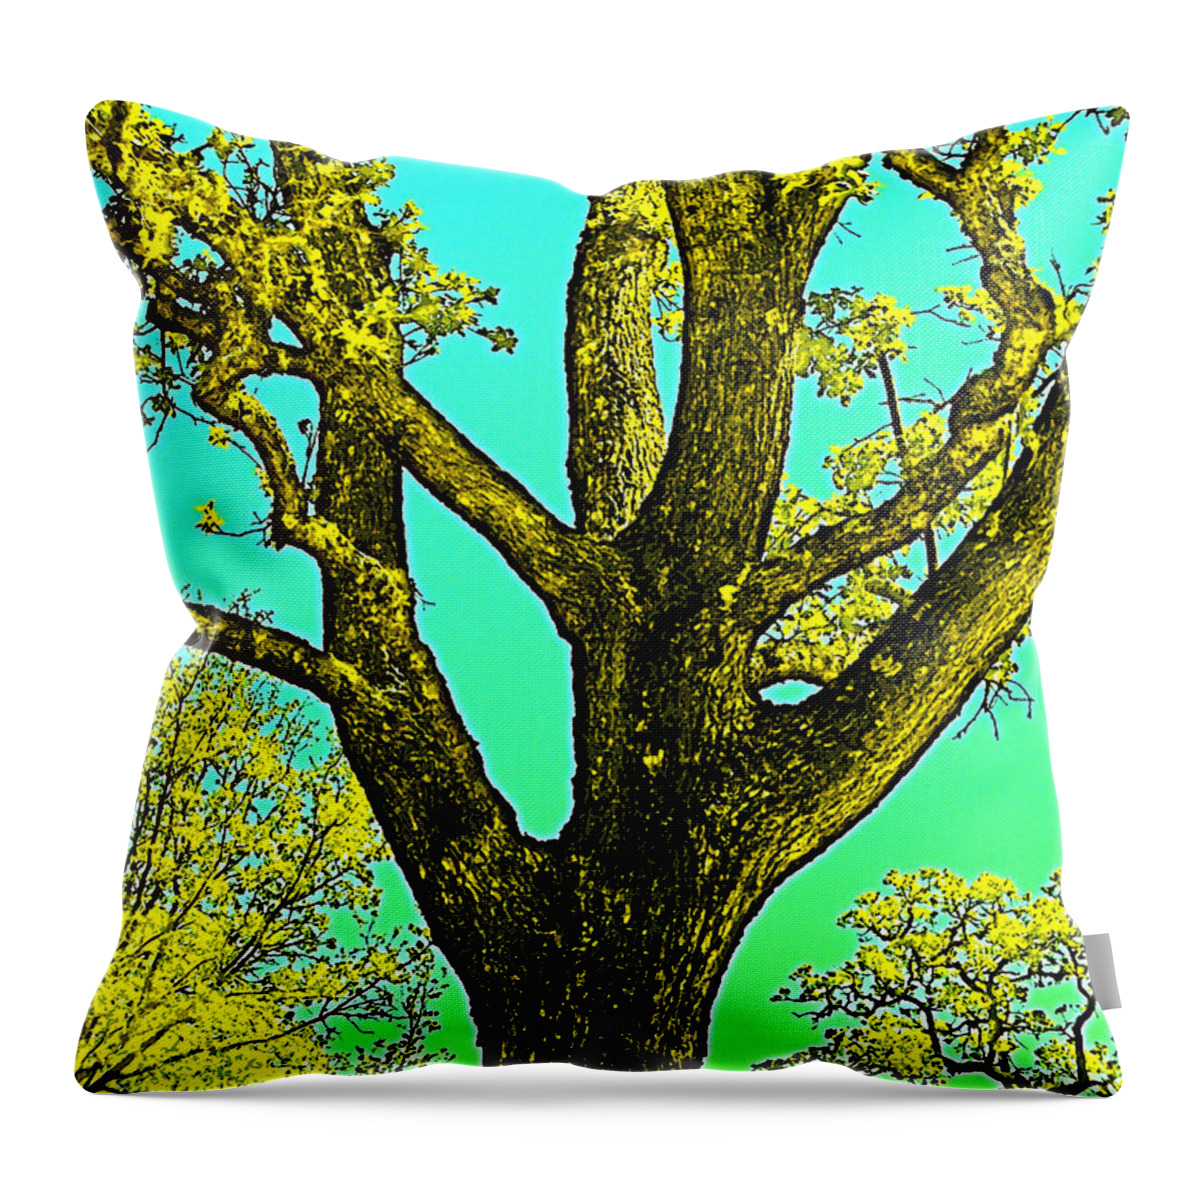 Oak Tree Throw Pillow featuring the photograph Oaks 3 by Pamela Cooper